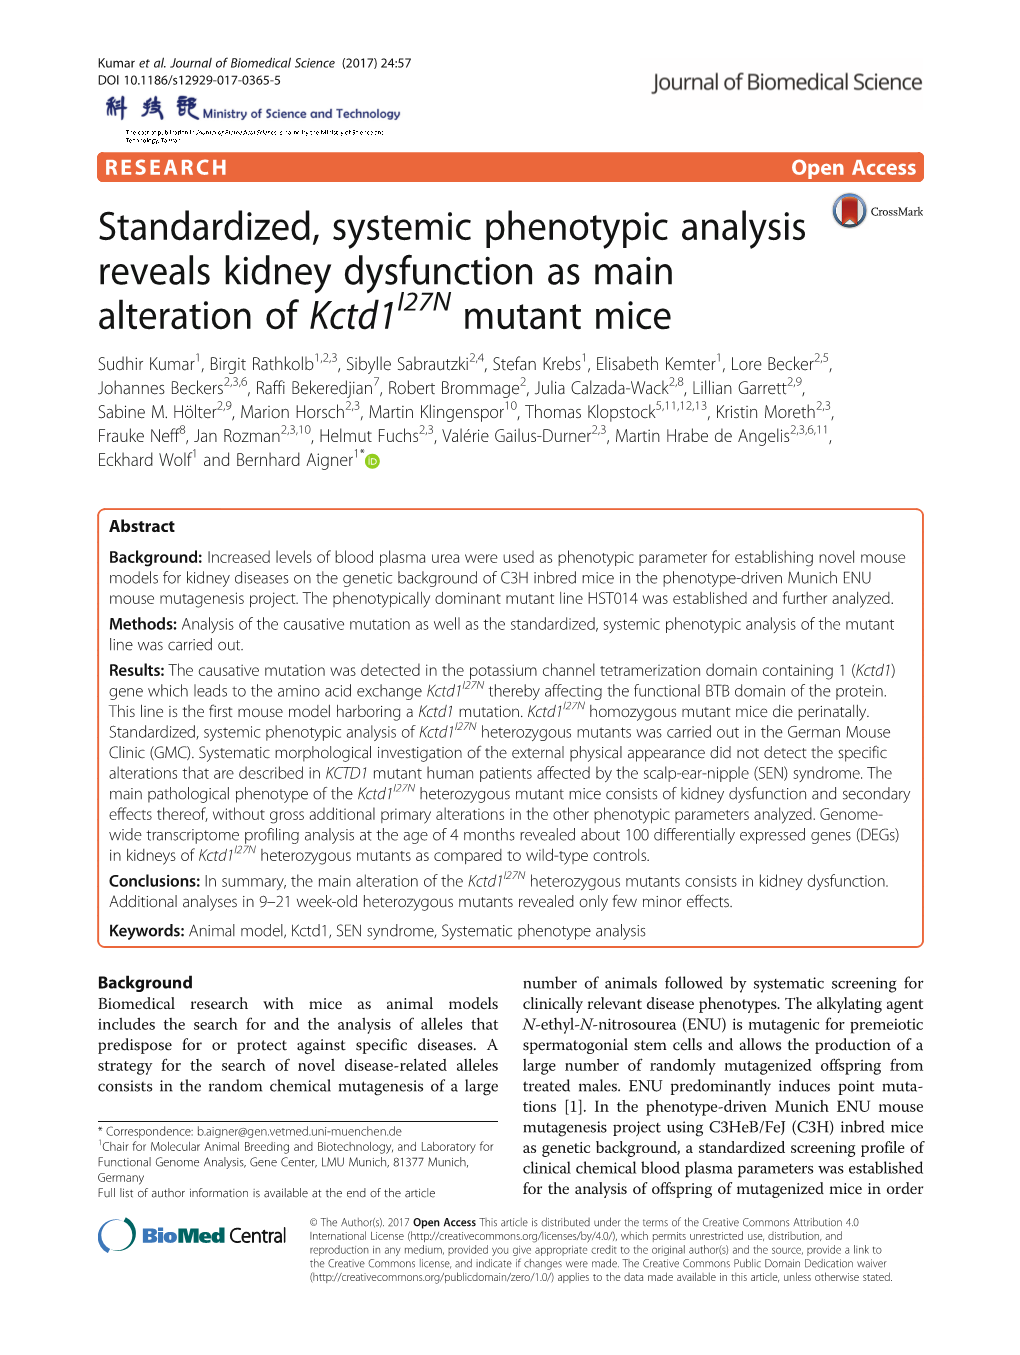 Standardized, Systemic Phenotypic Analysis Reveals Kidney Dysfunction